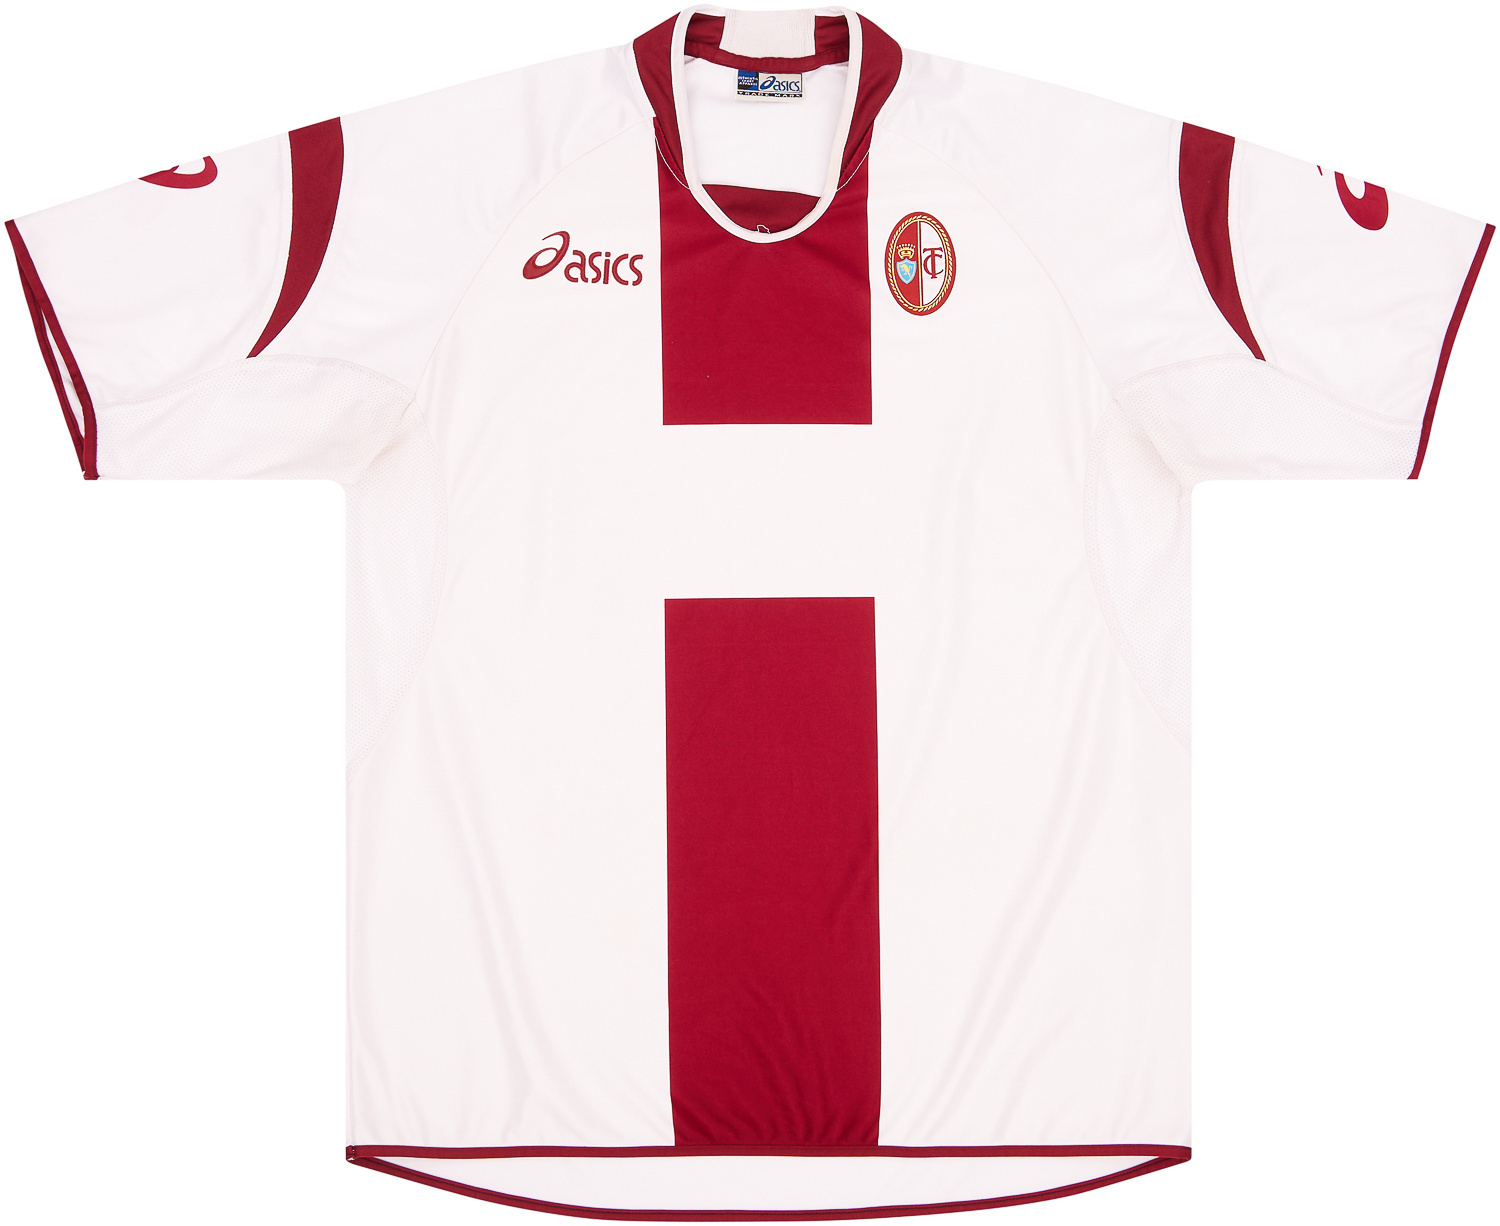 Torino  Away shirt (Original)